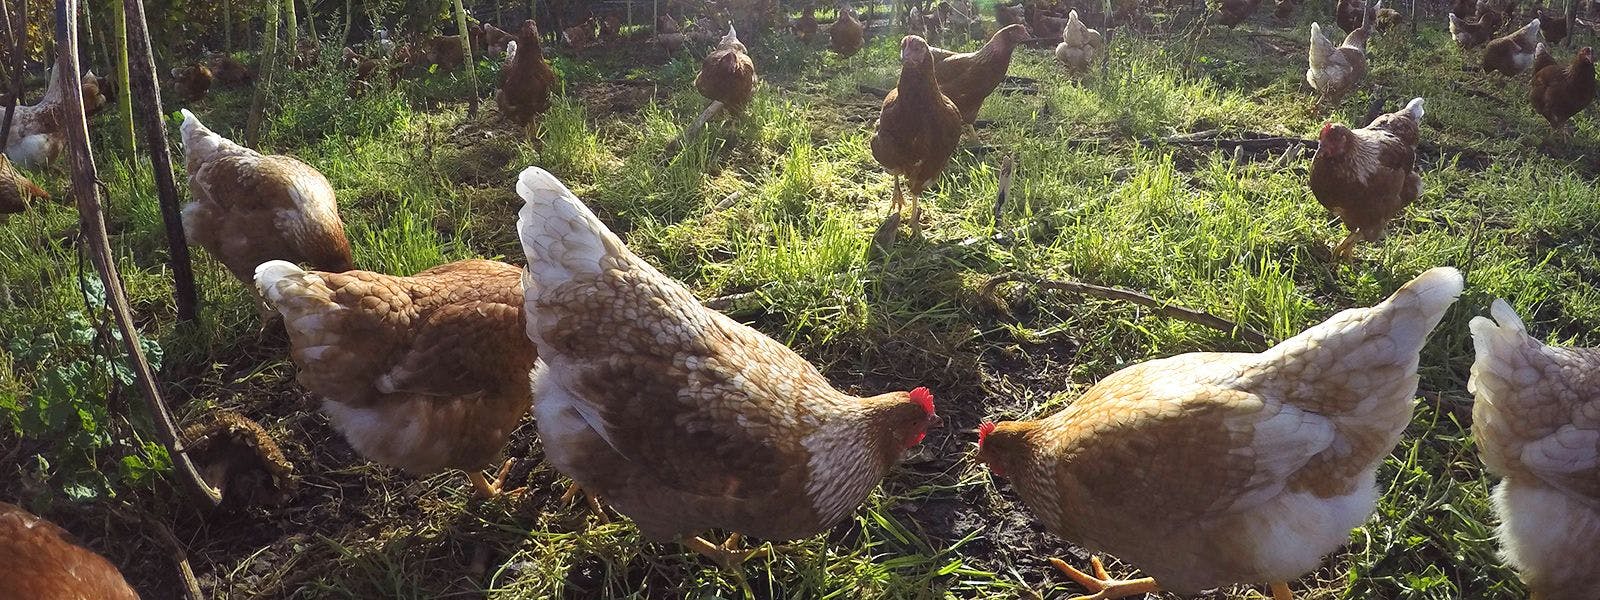 Free range chickens grazing outdoors